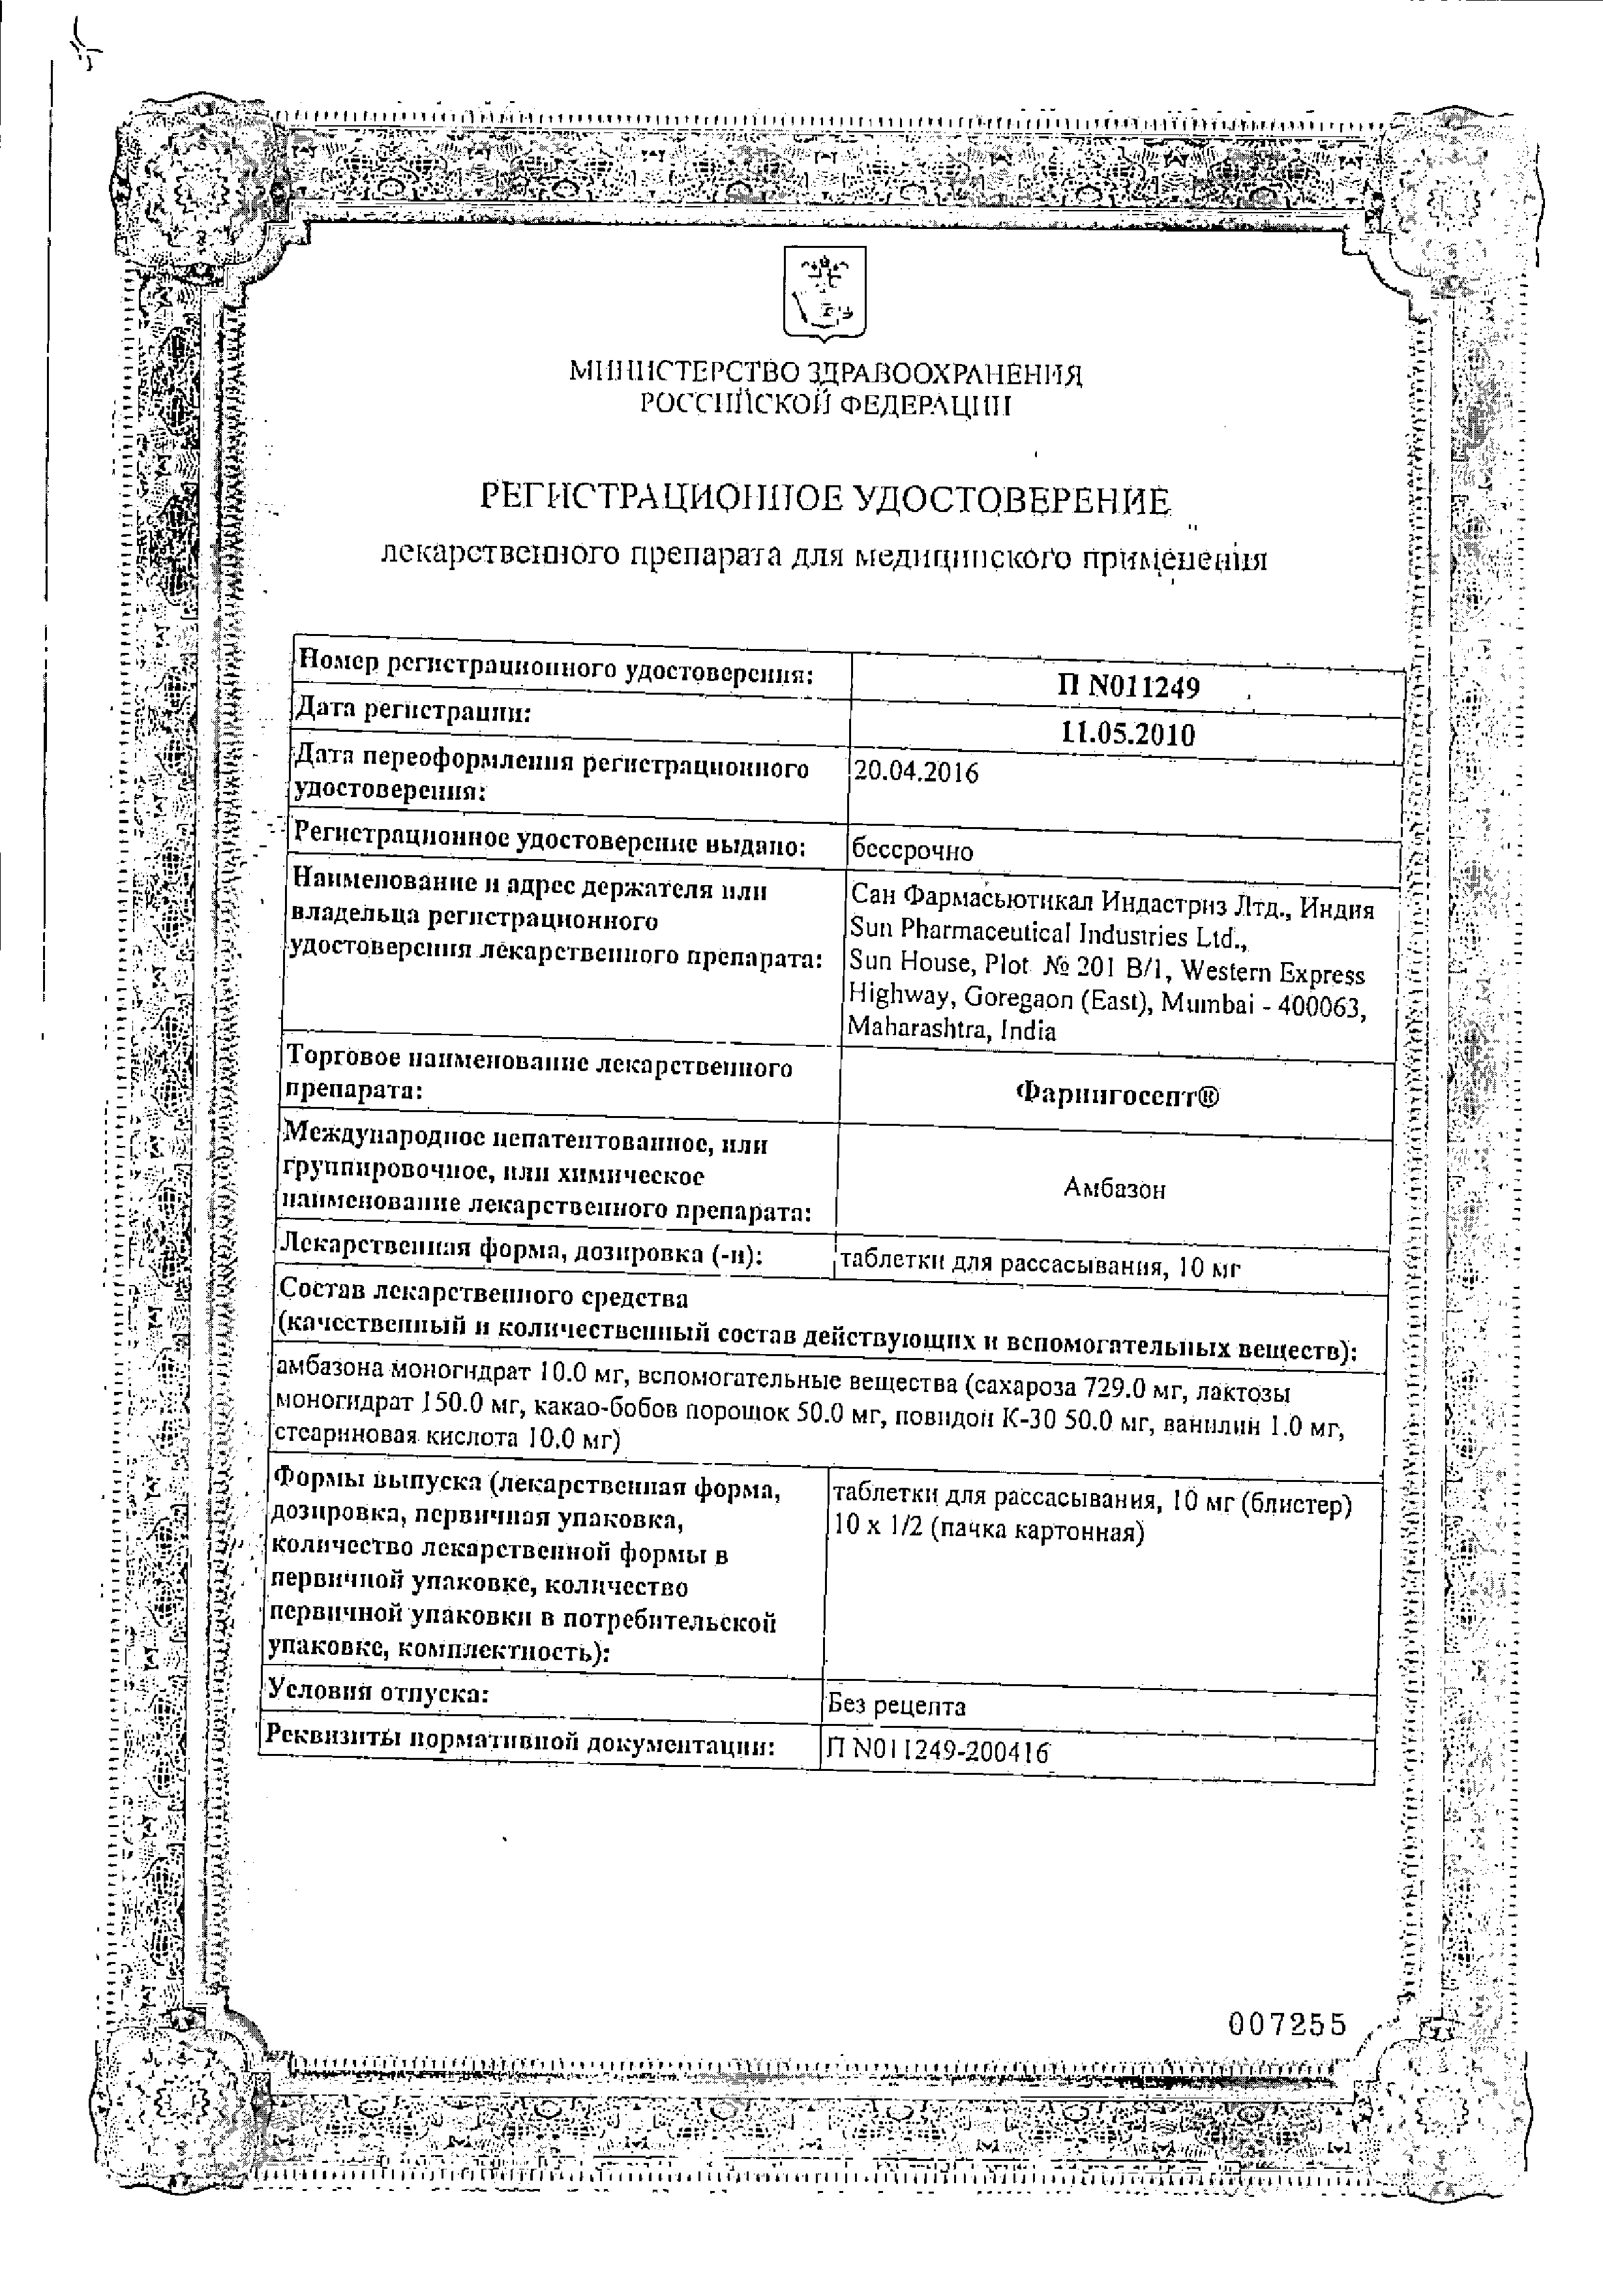 Фарингосепт сертификат